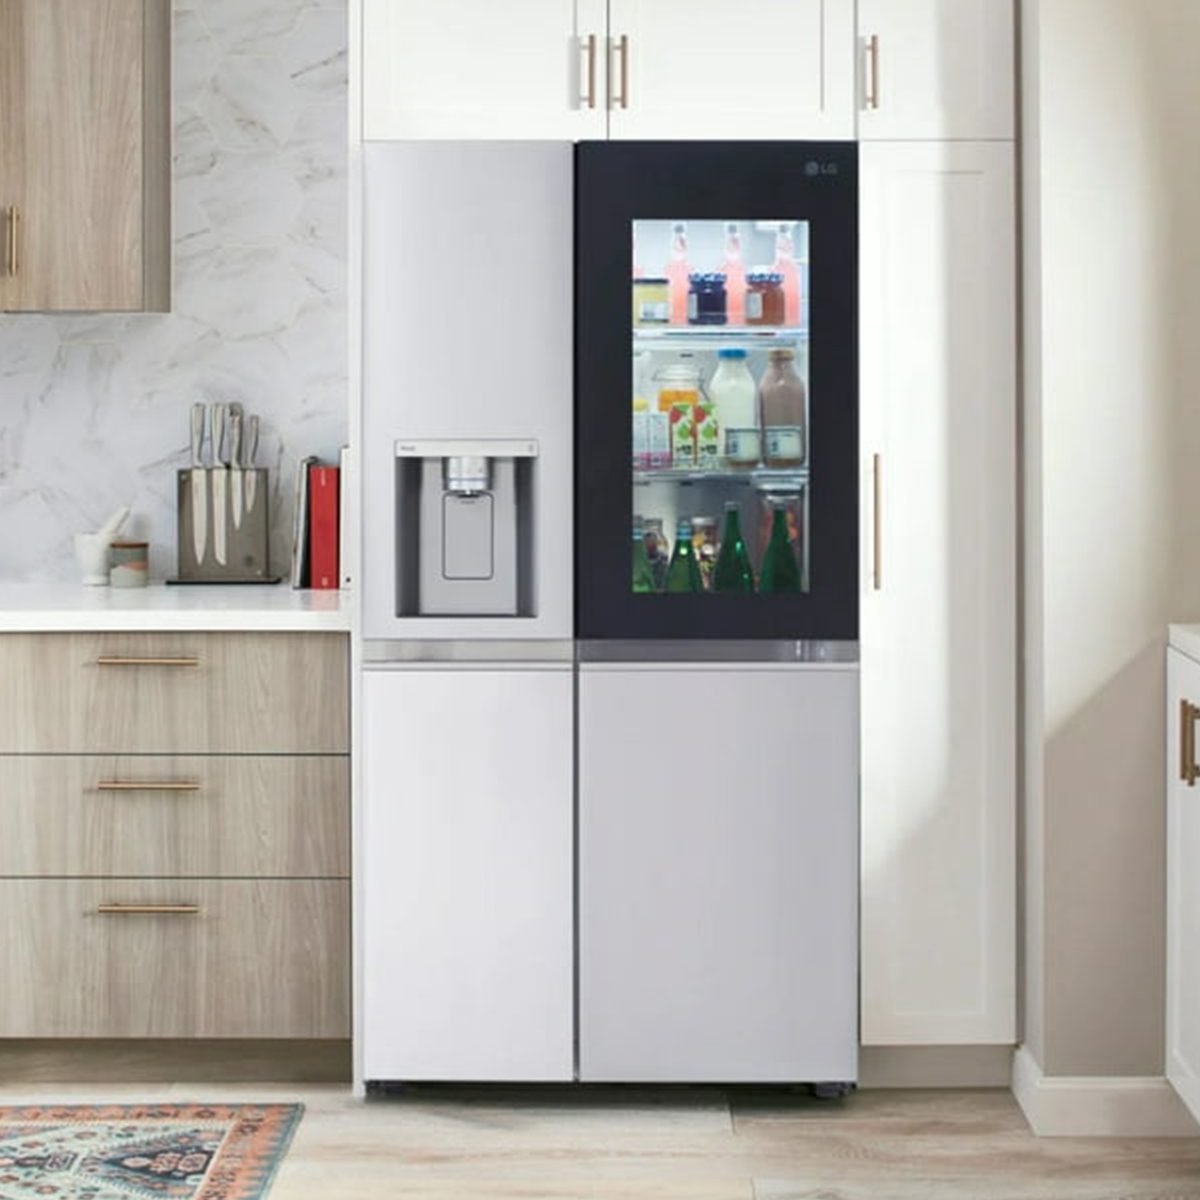 5 Most Reliable Refrigerator Brands, According To Repair Techs Ft Via Amazon.com